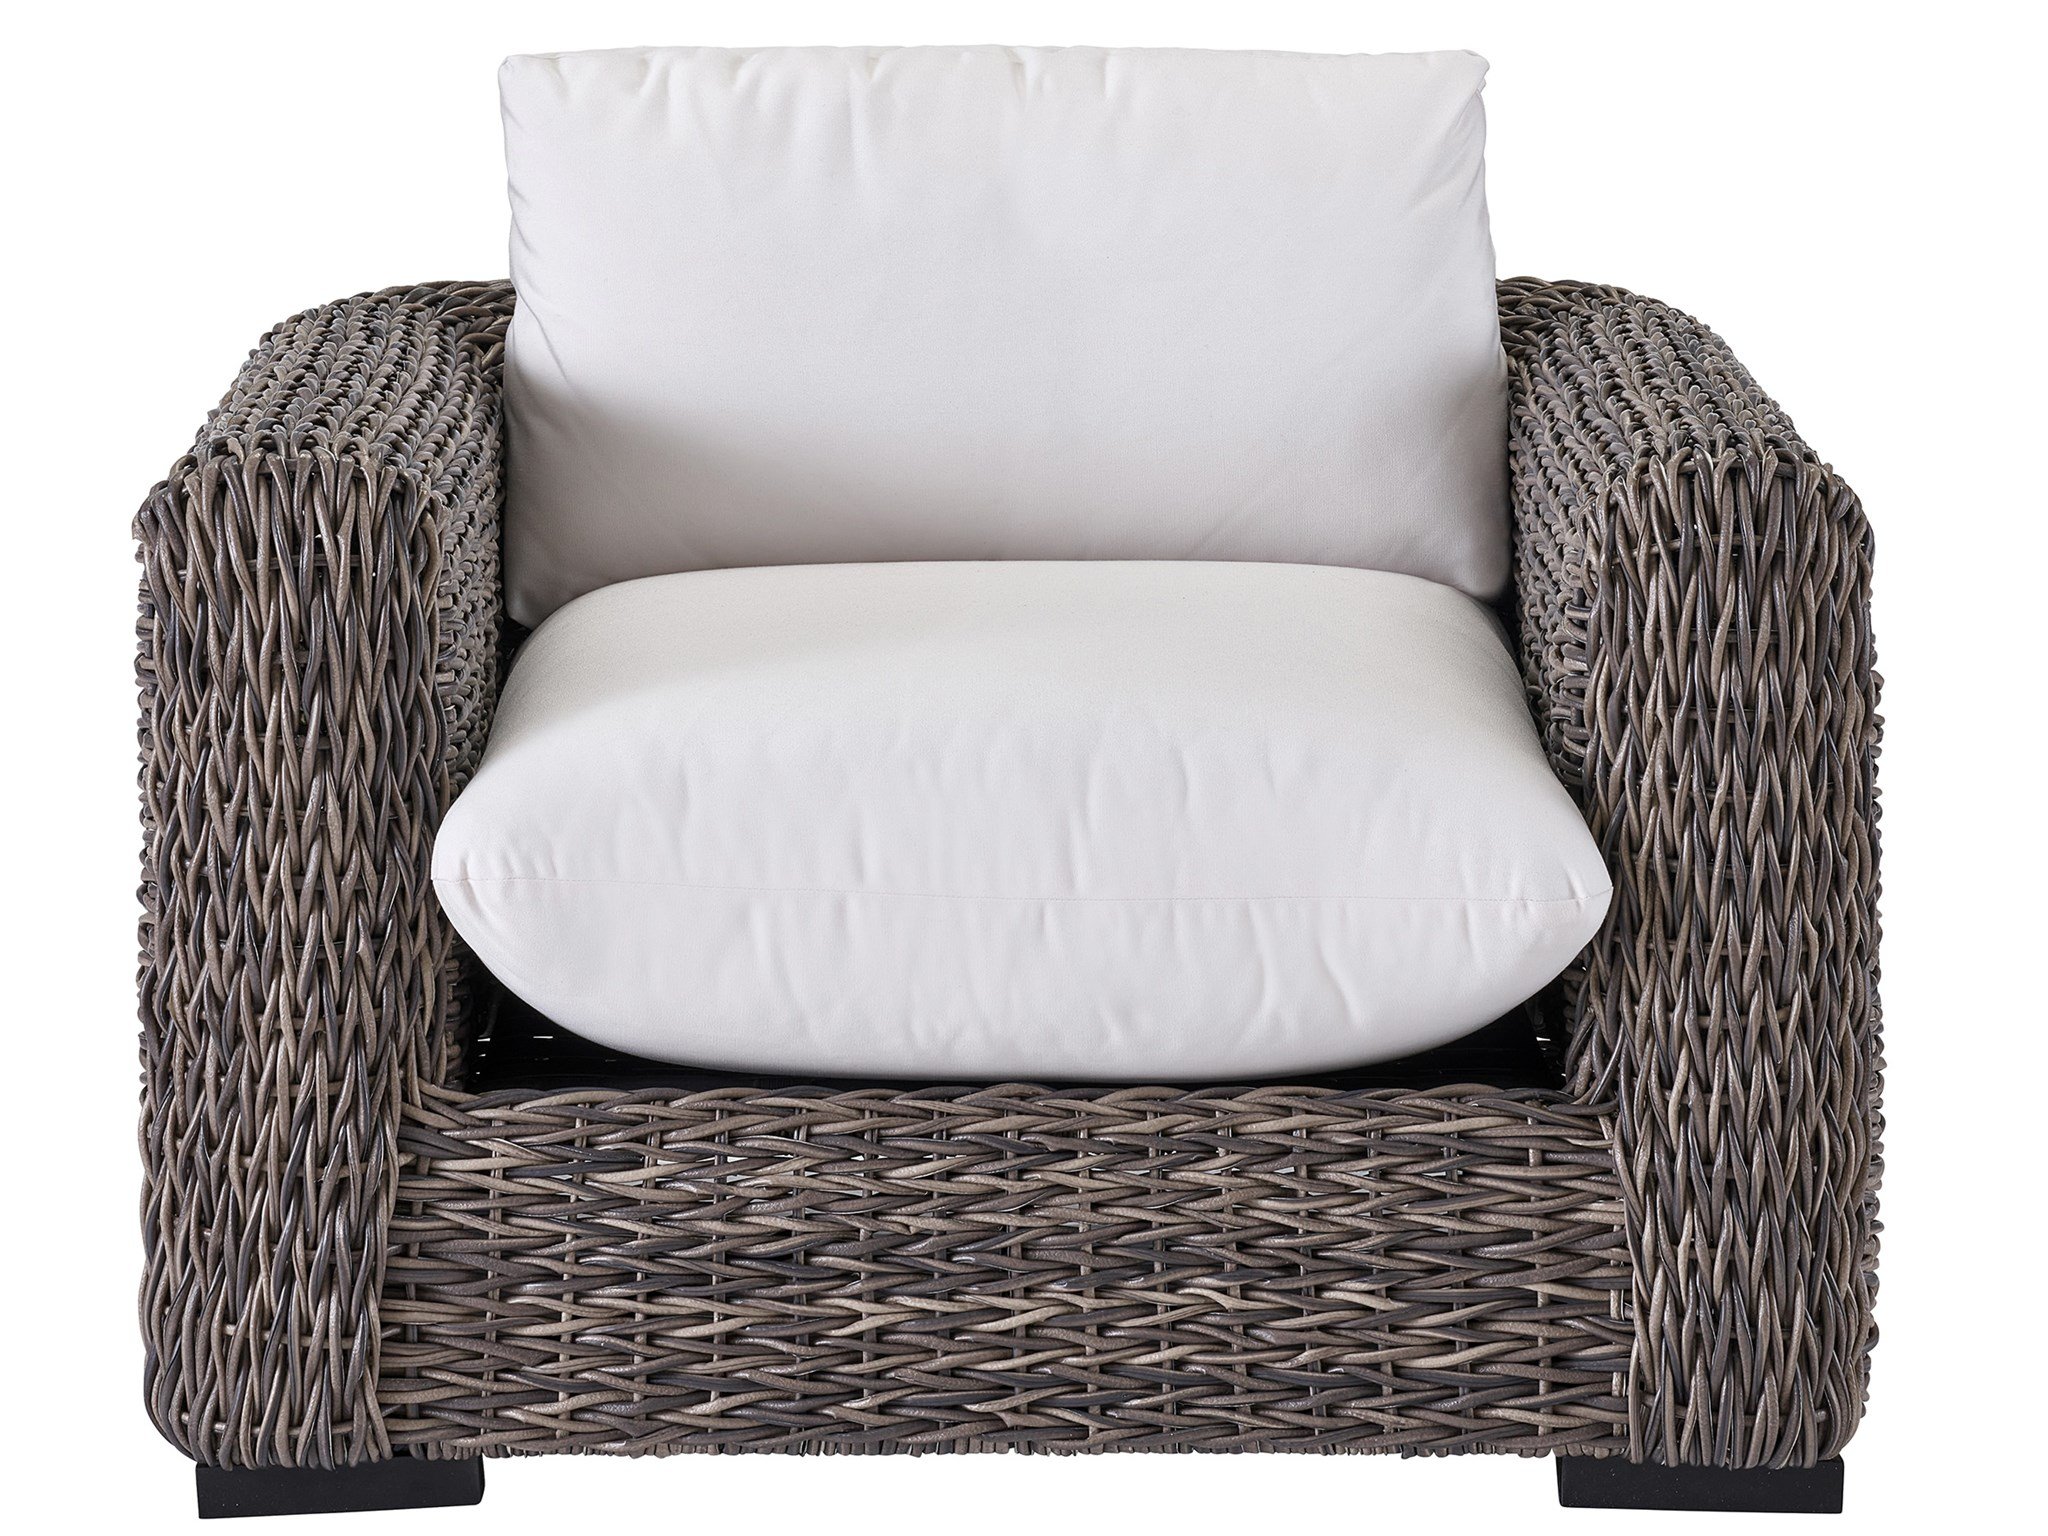 Montauk Lounge Chair